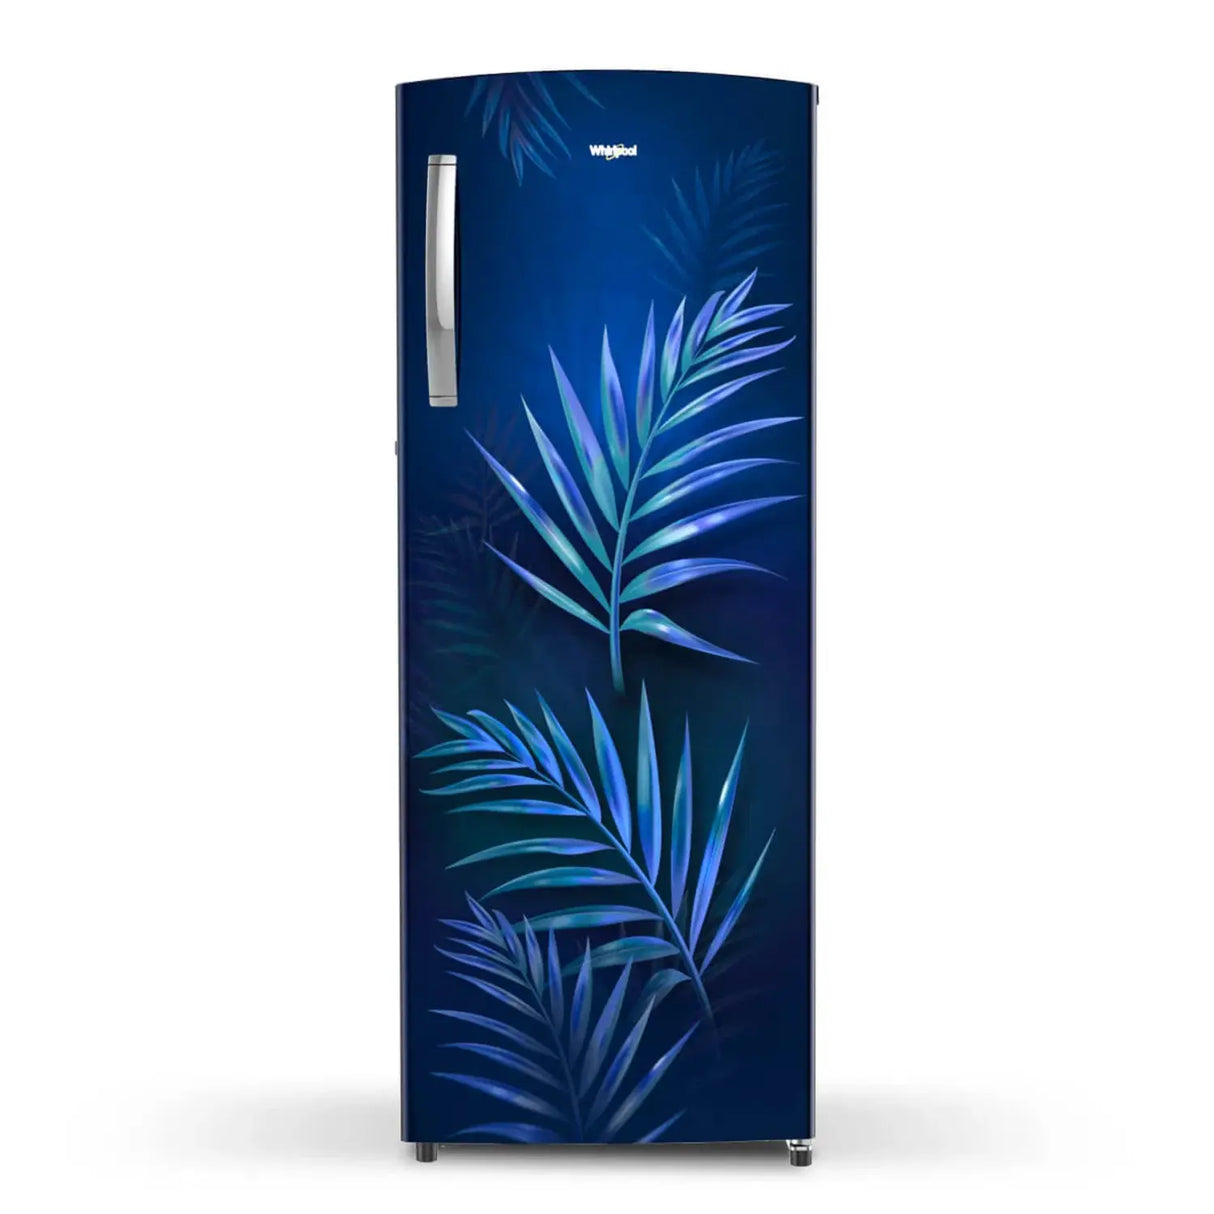 Whirlpool Pro Plus 274L 3 Star Single-Door Refrigerator - Palm (W.POOL REF 72845)